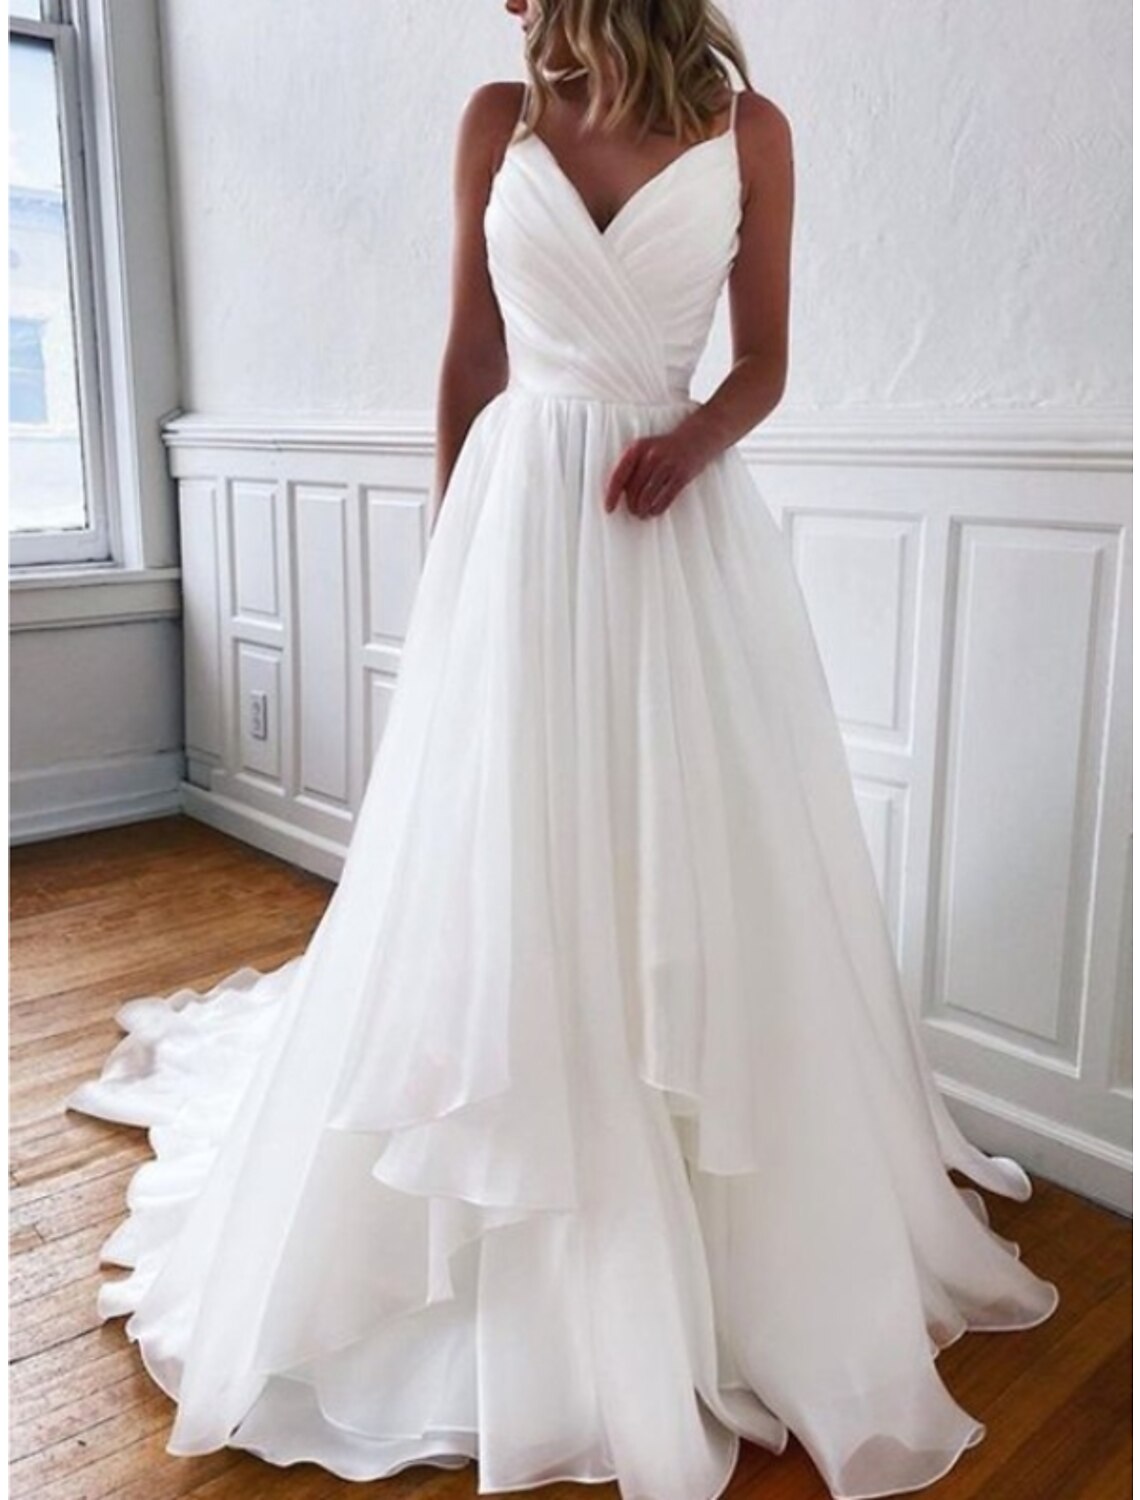 Wholesa Simple Wedding Dresses Sheath / Column Camisole Sleeveless Court Train Chiffon Bridal Gowns With Pleats